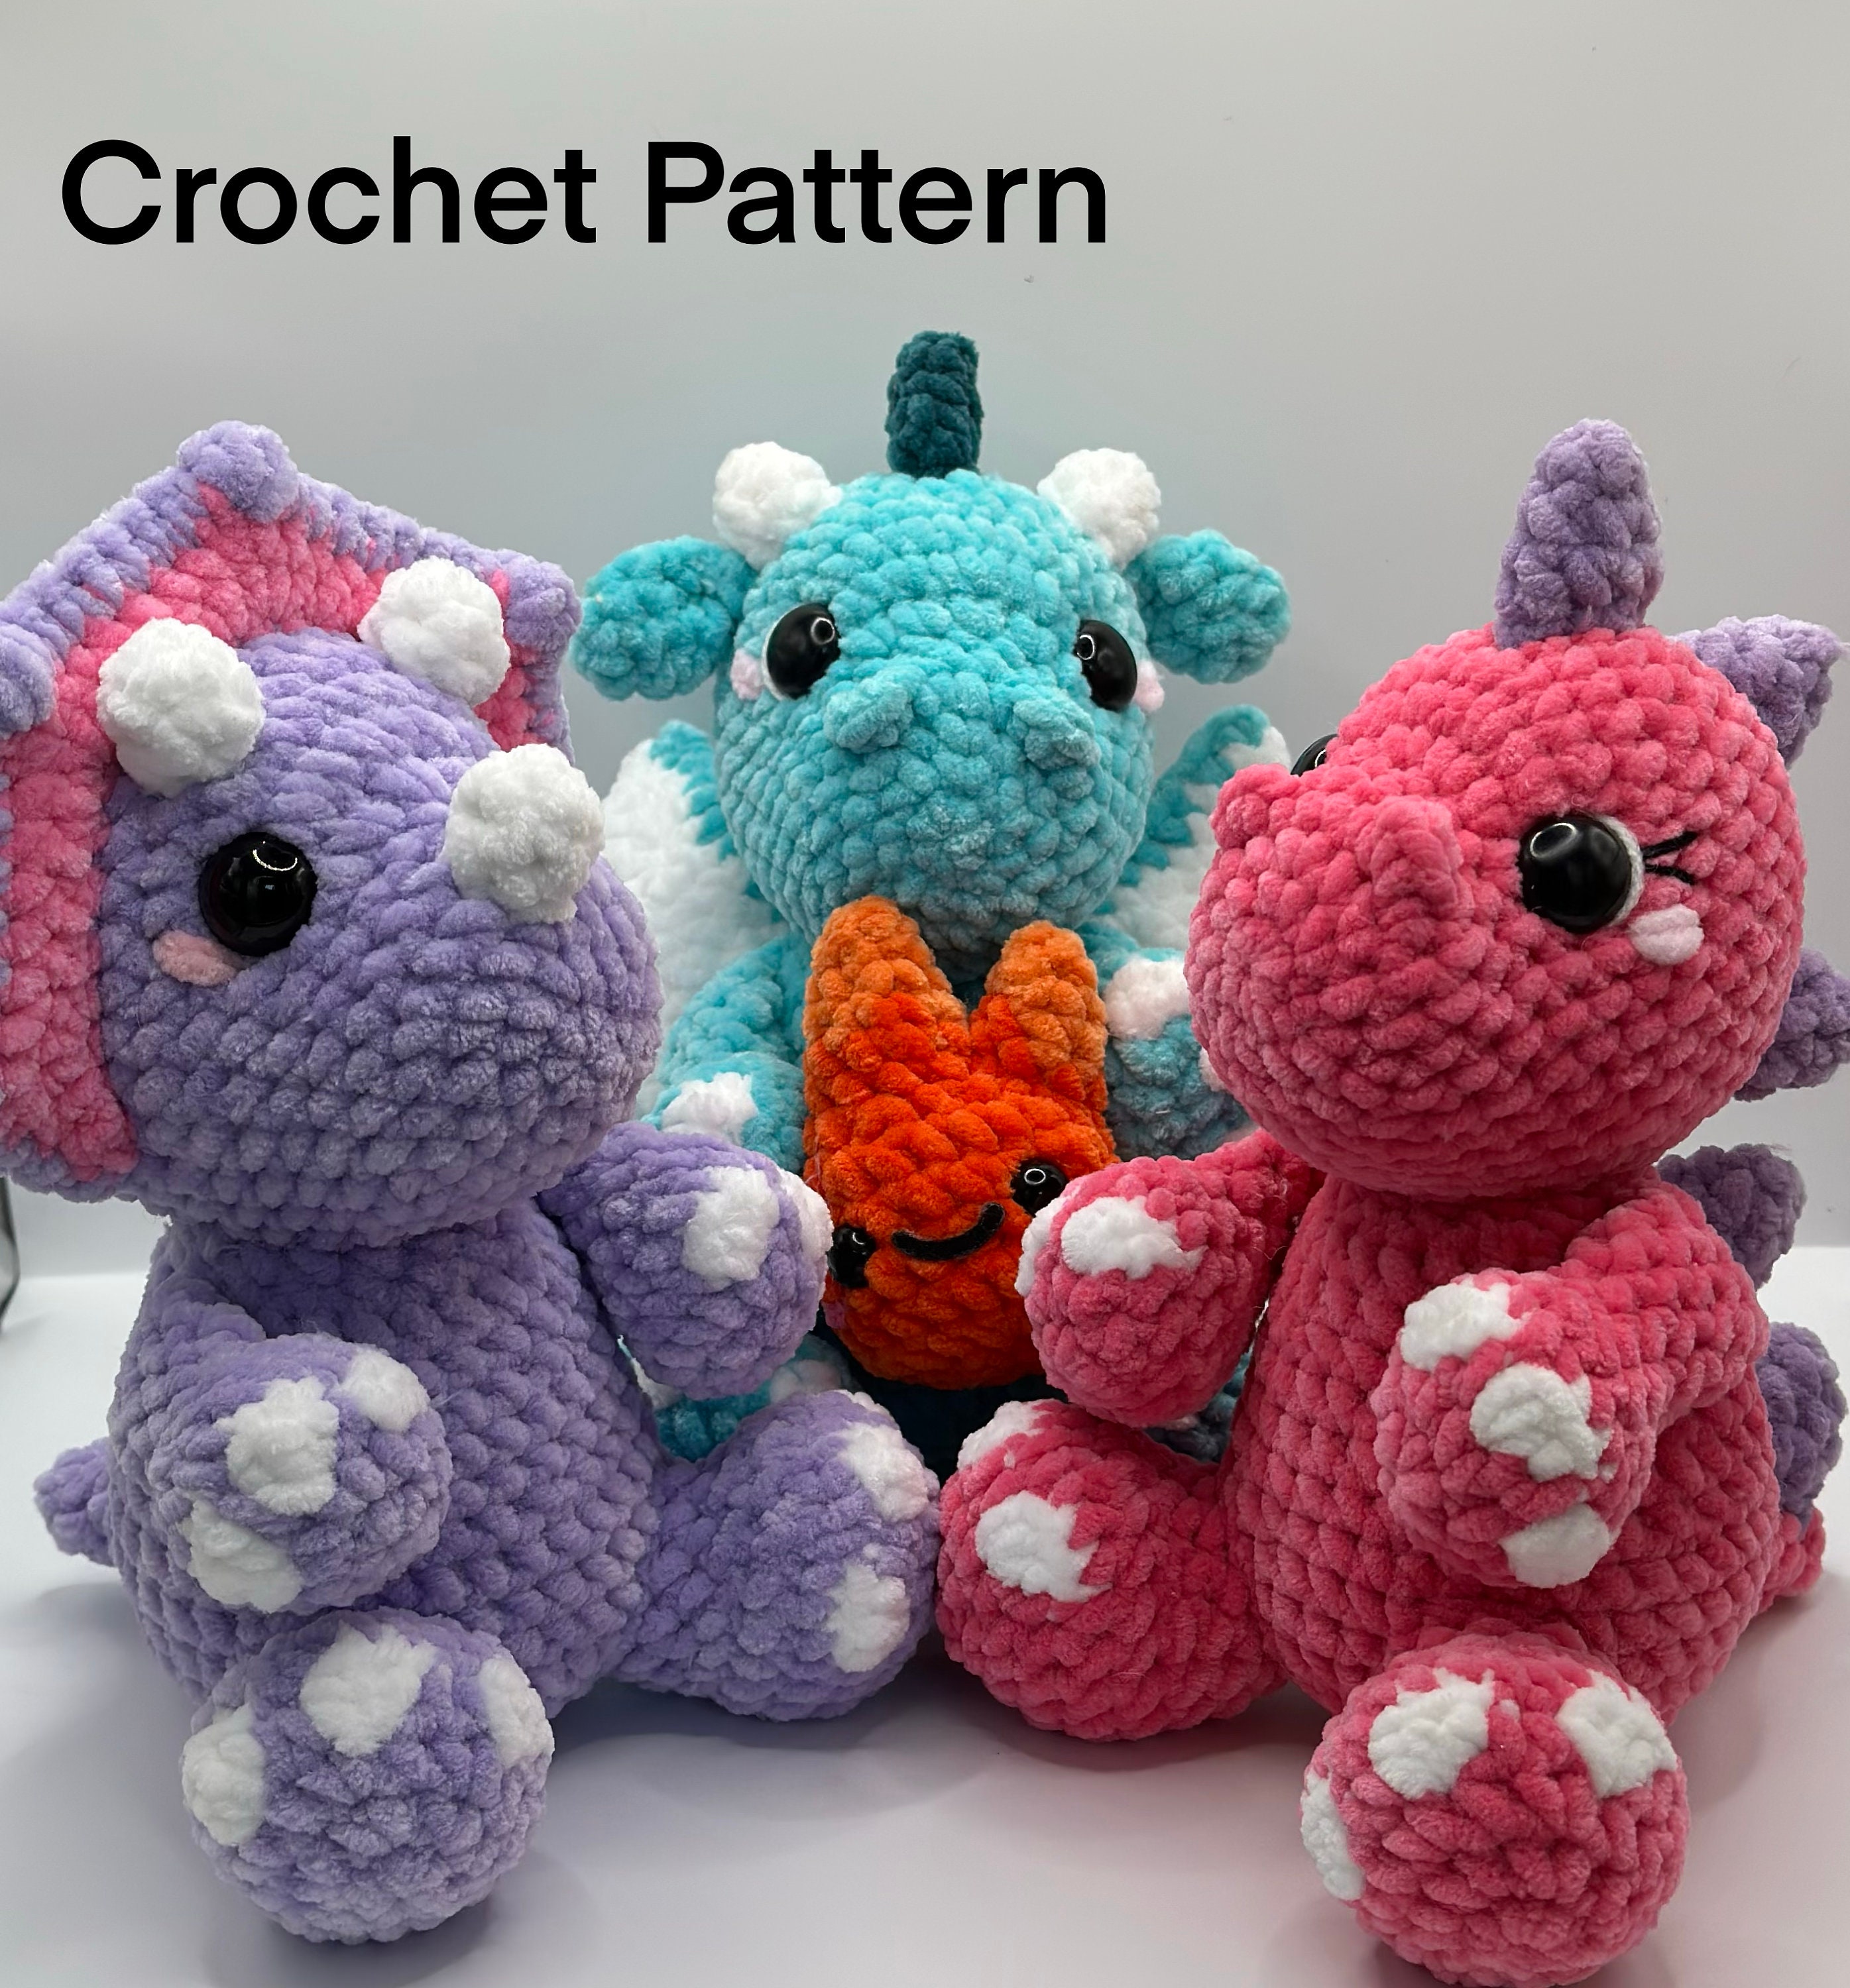 Dino Dragon Crochet Plushie: Crochet pattern